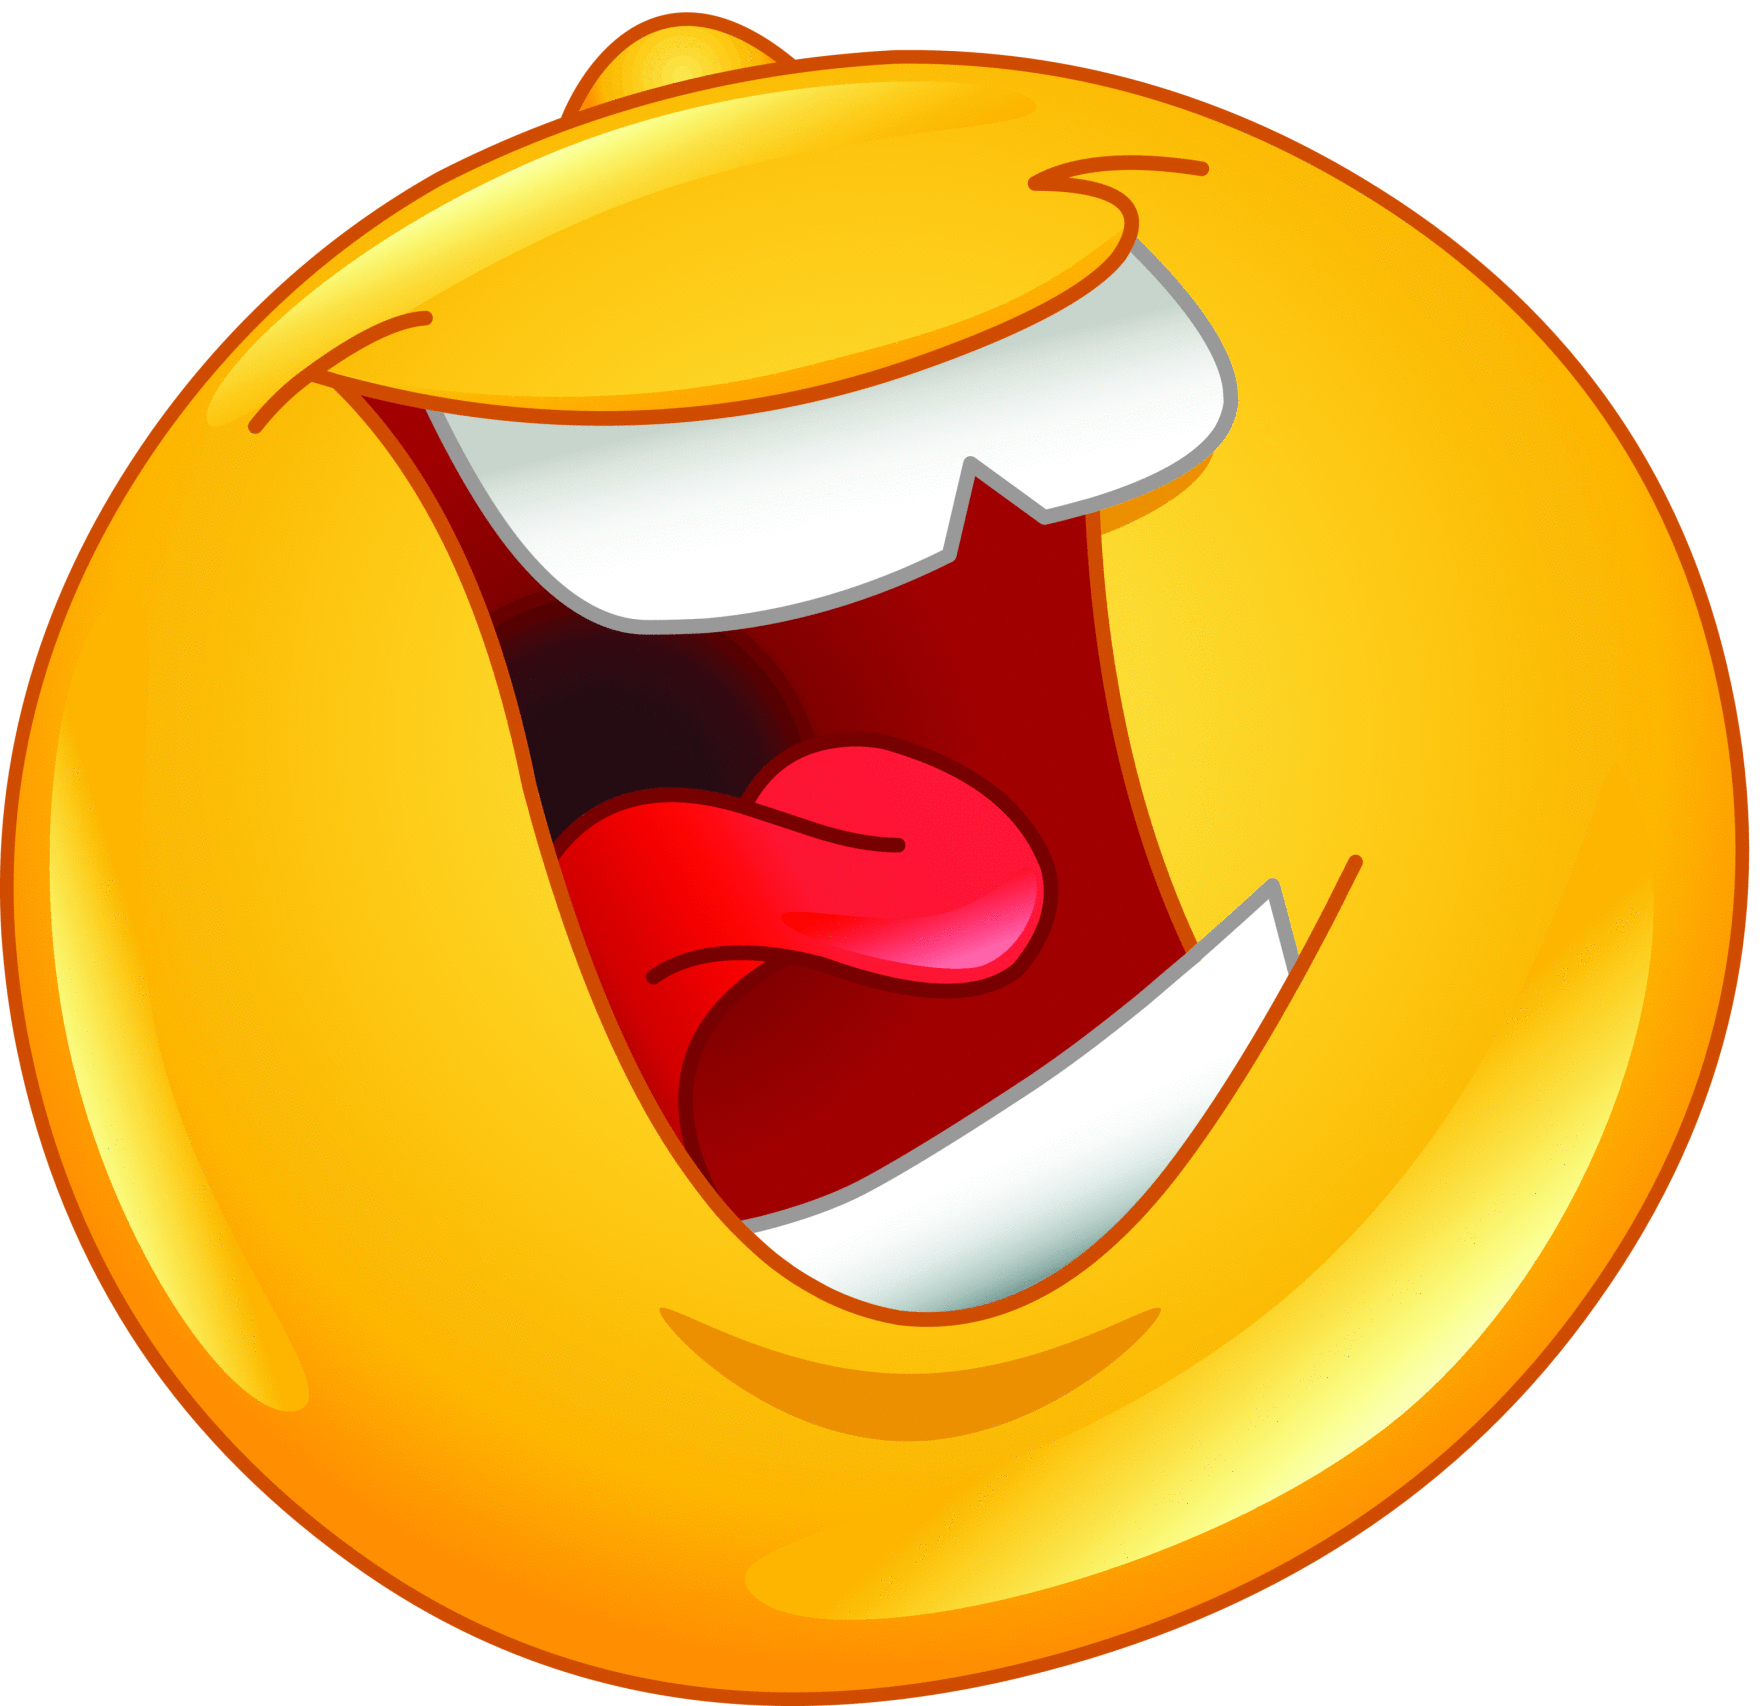 Laughing face clip art - ClipartFox